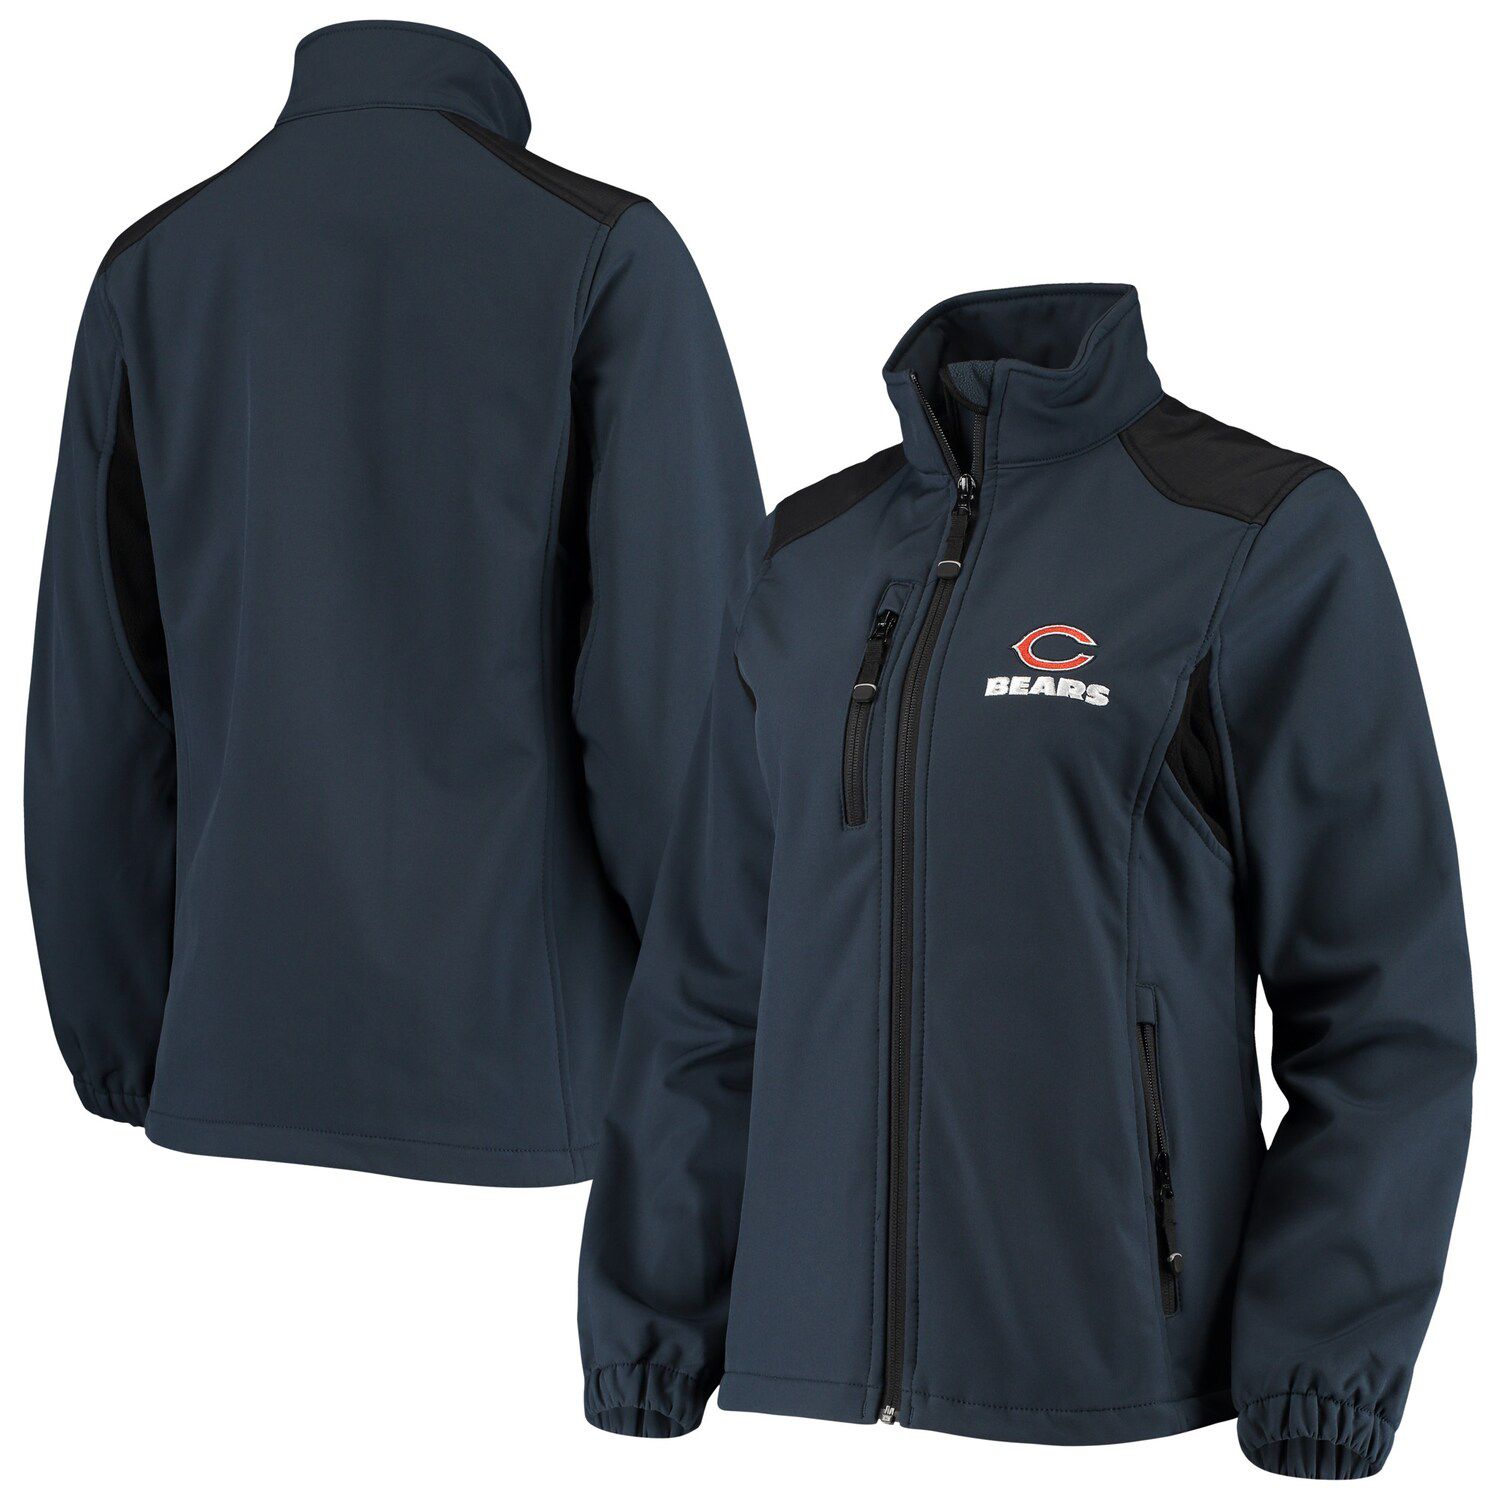 Image for Unbranded Women's Dunbrooke Navy Chicago Bears Softshell Fleece Full-Zip Jacket at Kohl's.